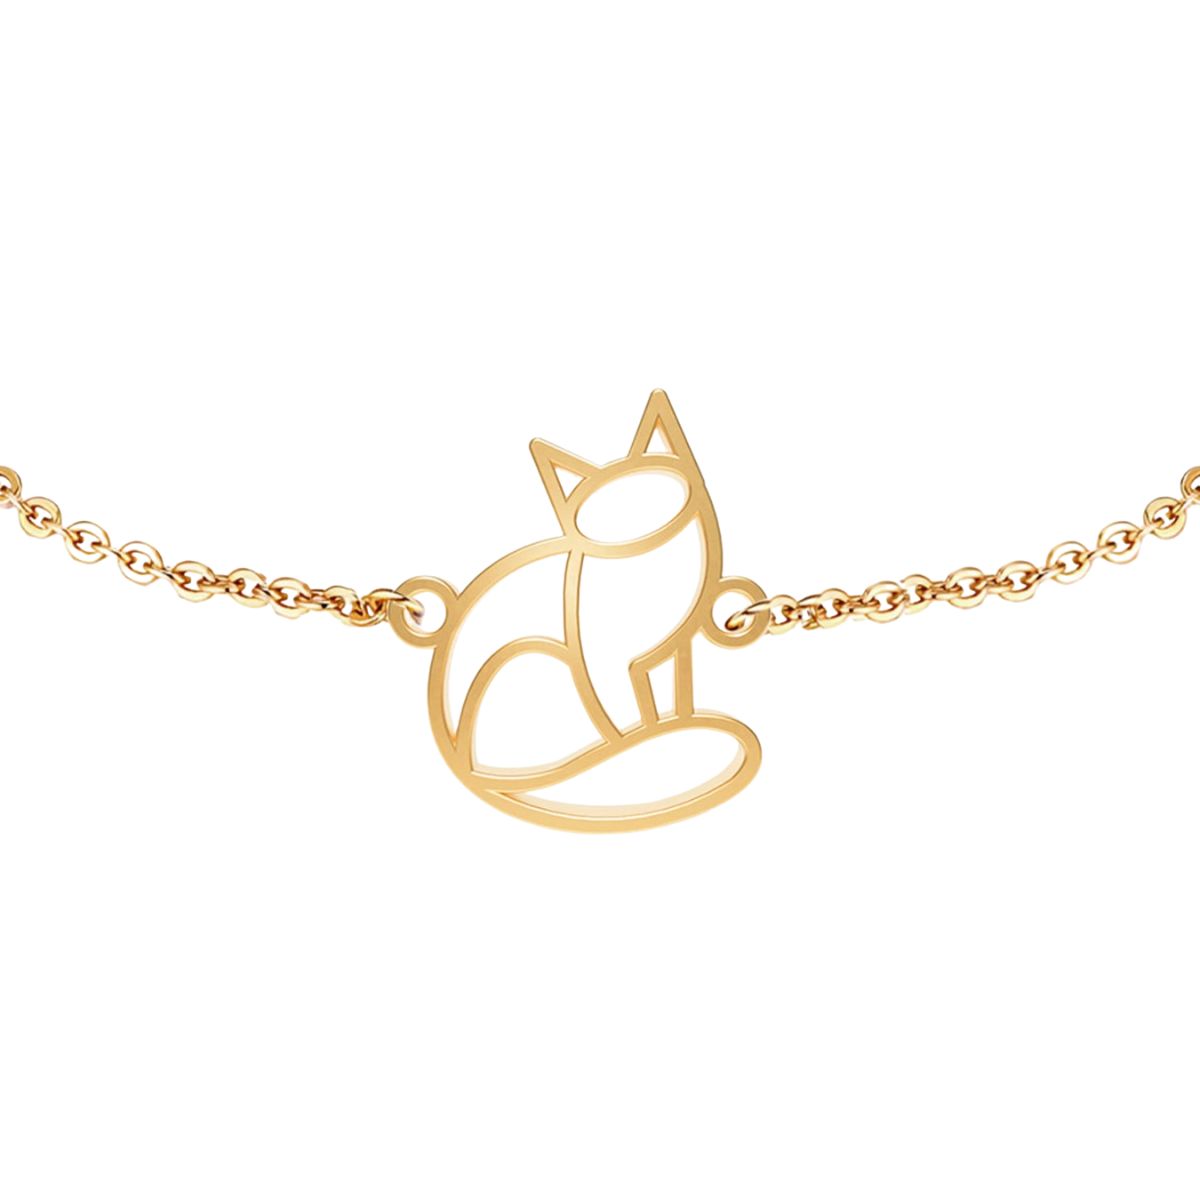 Bracelet Chat Gold - Armkette